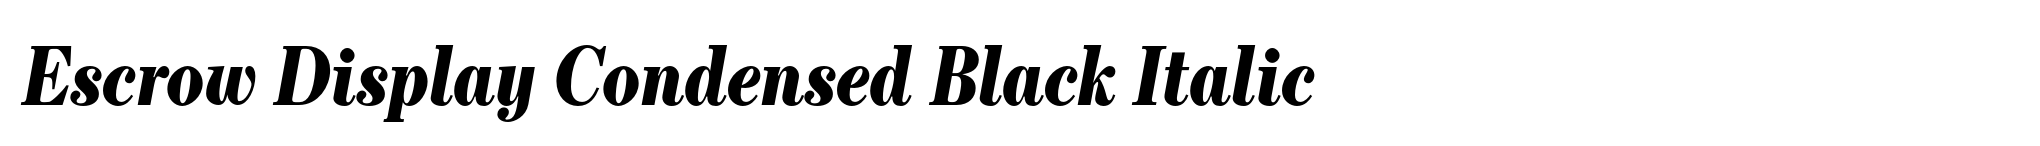 Escrow Display Condensed Black Italic image